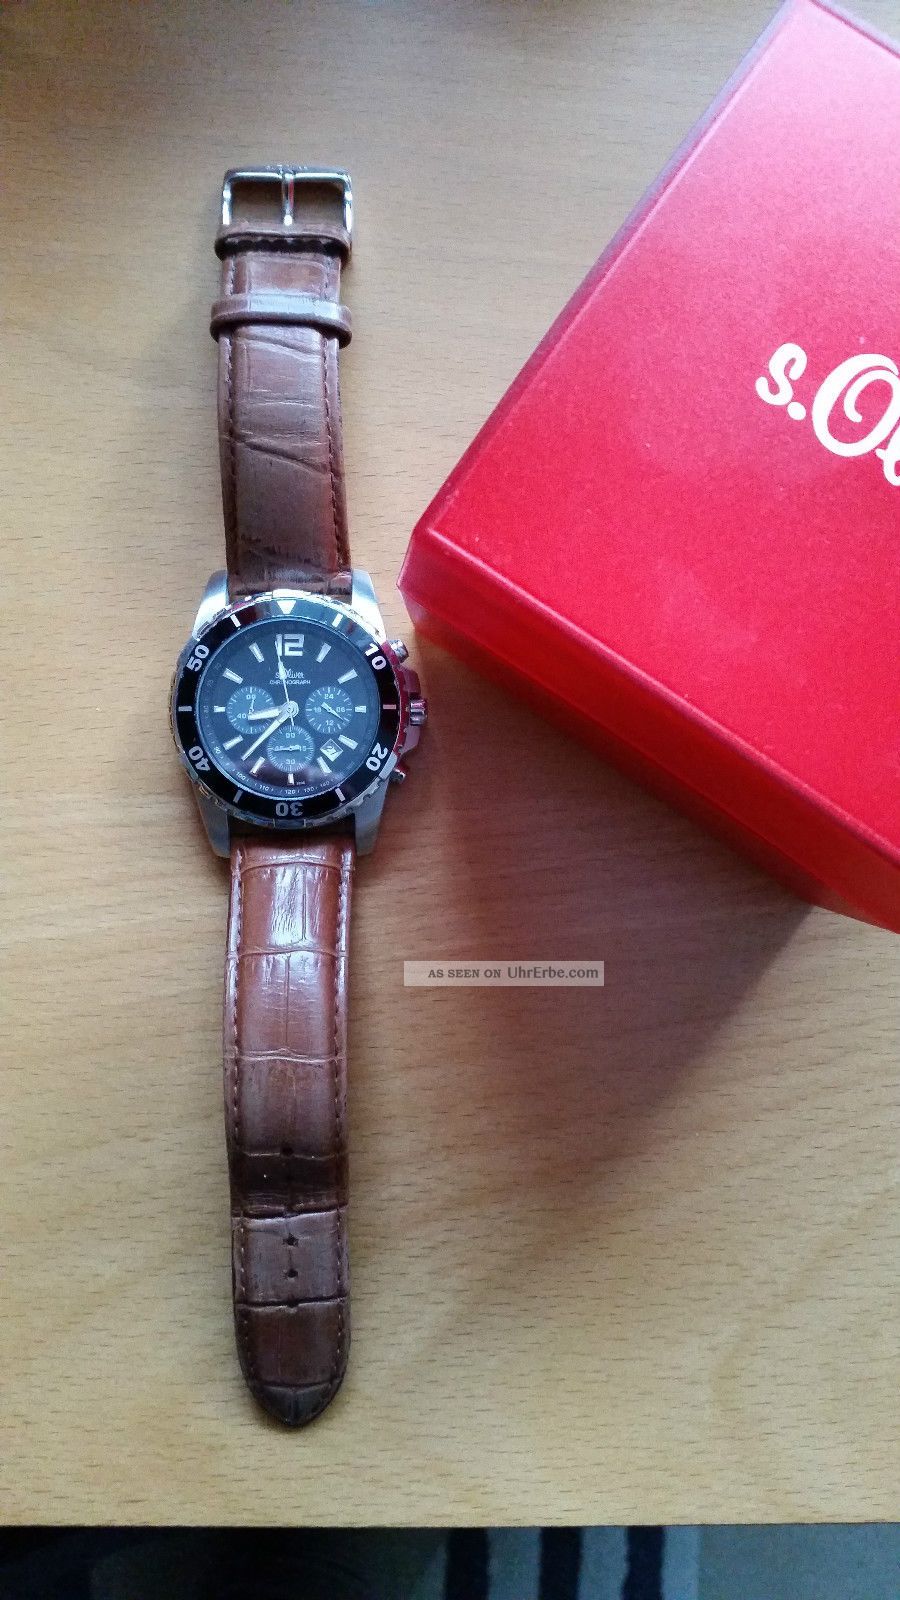 Chronograph Soliver Time So - 381 - Lc Armbanduhr Für Herren - Top - Mit Ovp Armbanduhren Bild